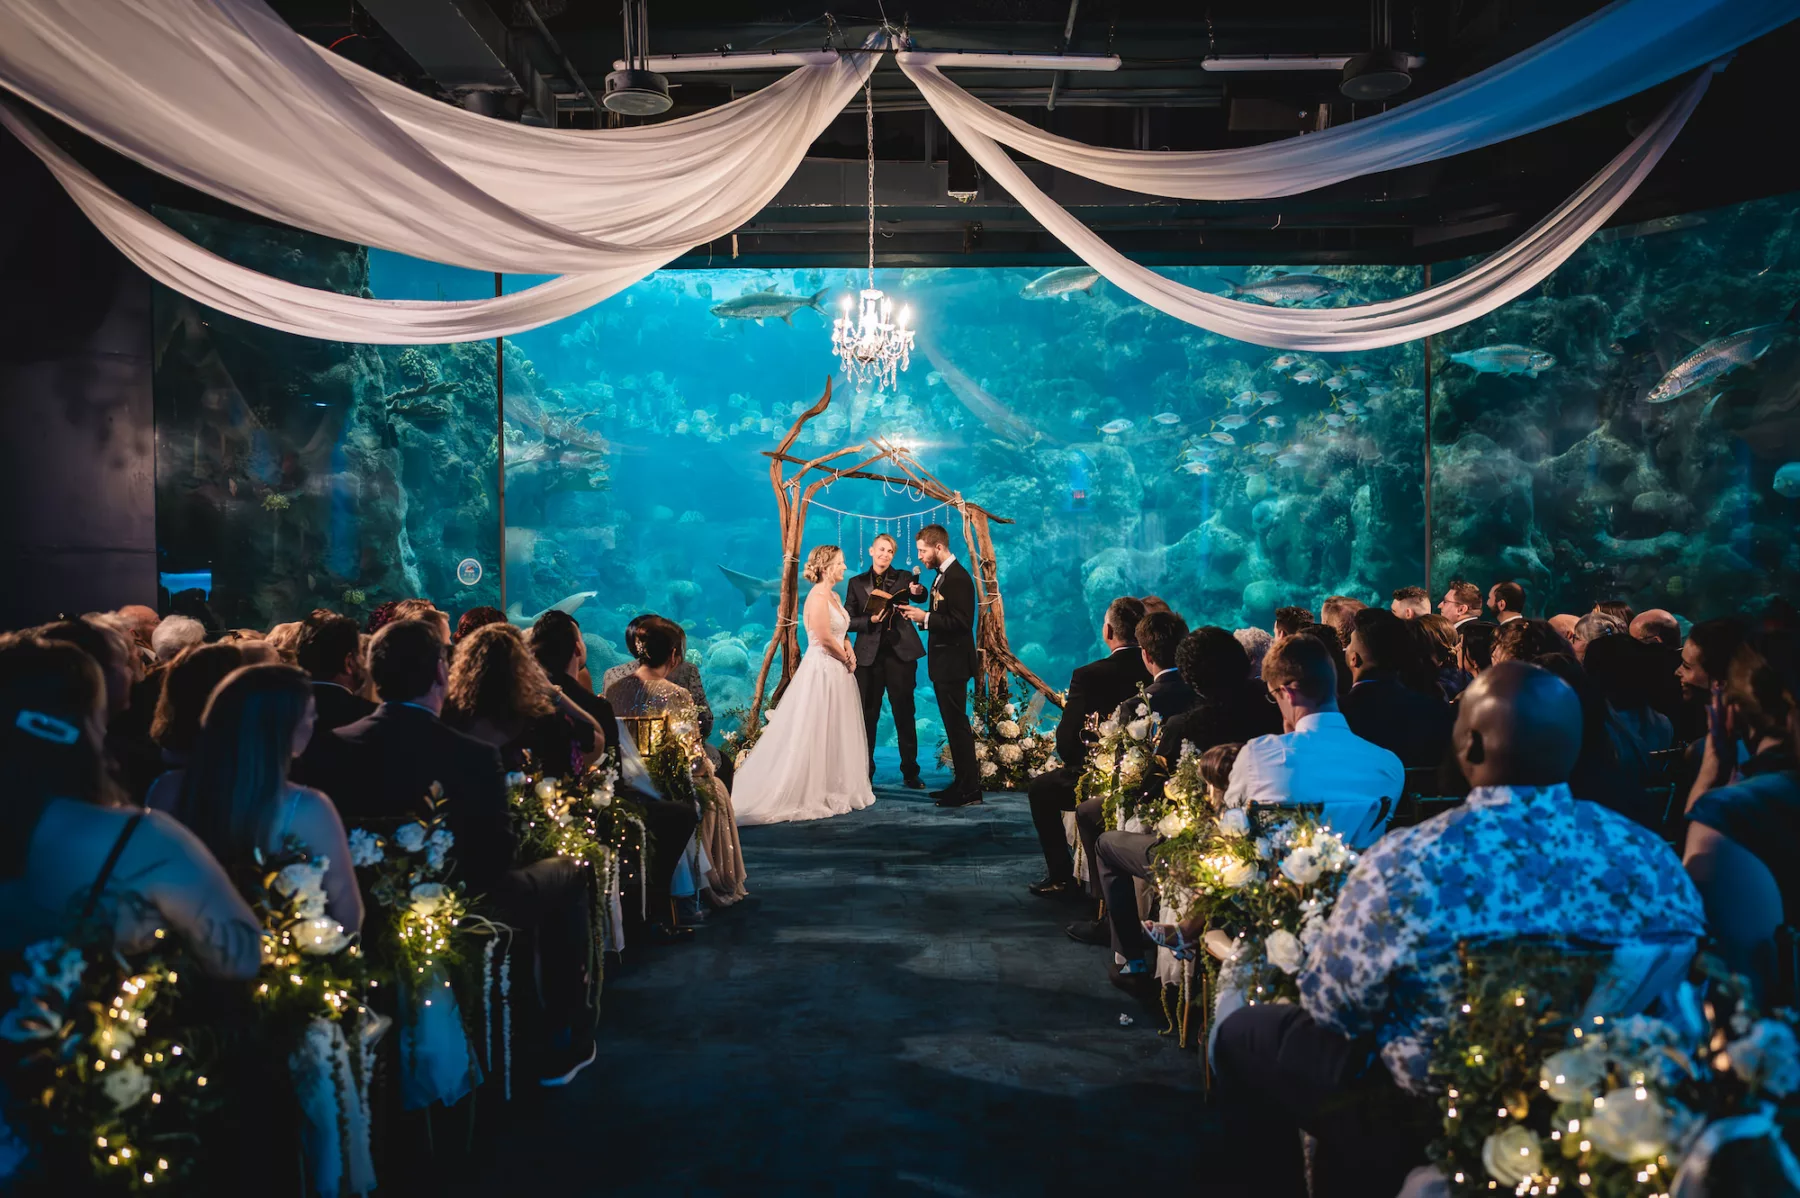 Nautical Inspired Coral Reef Gallery Wedding Ceremony Ideas | Tampa Bay Event Venue The Florida Aquarium